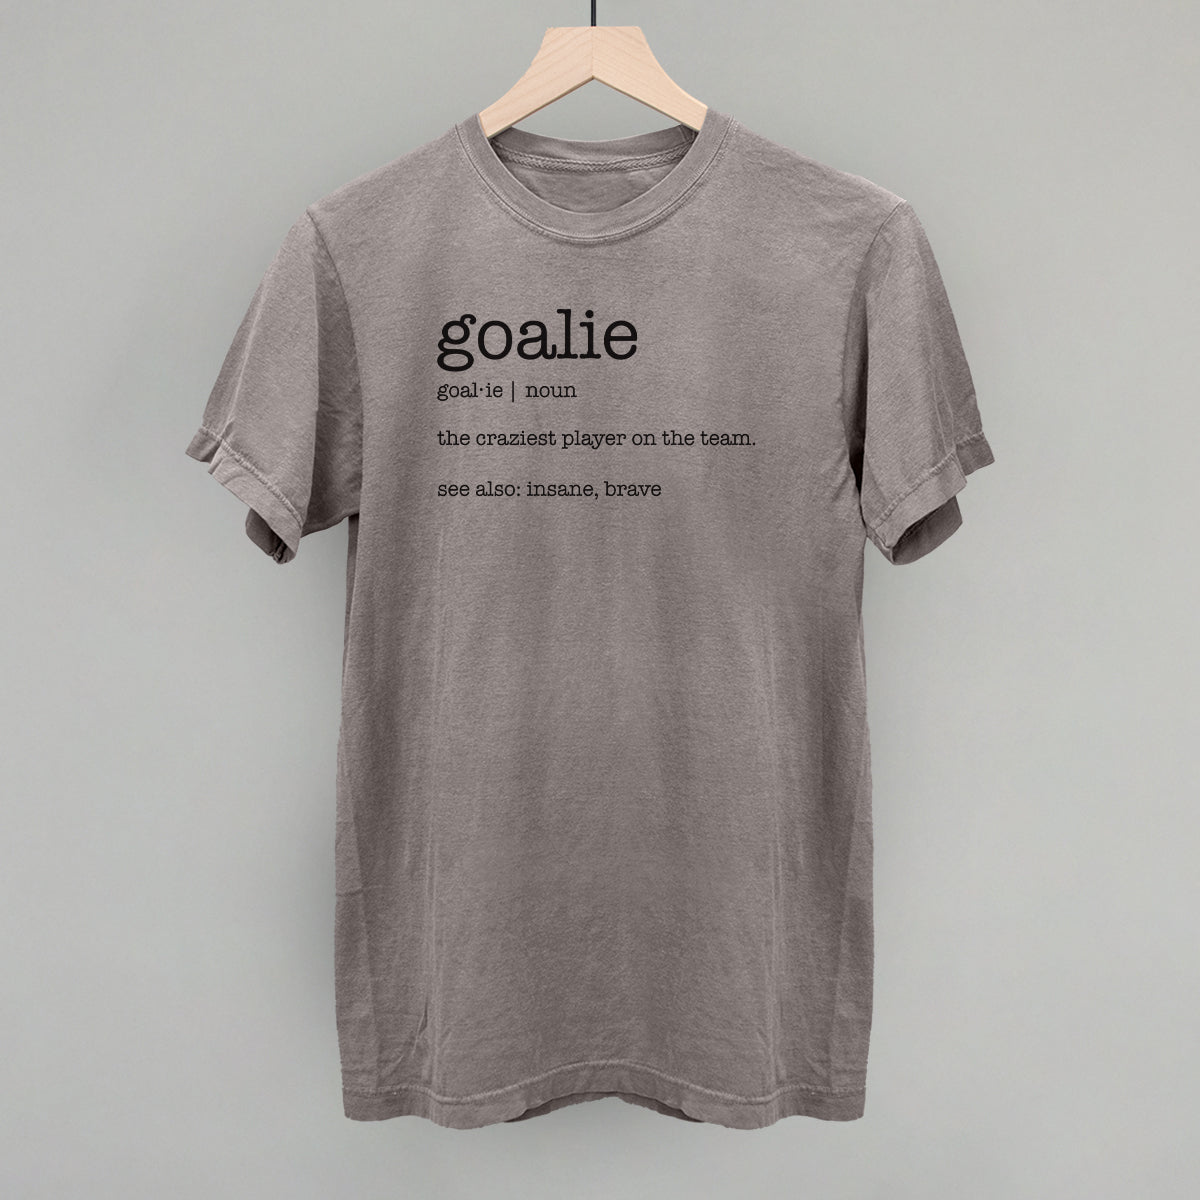 Goalie Definition